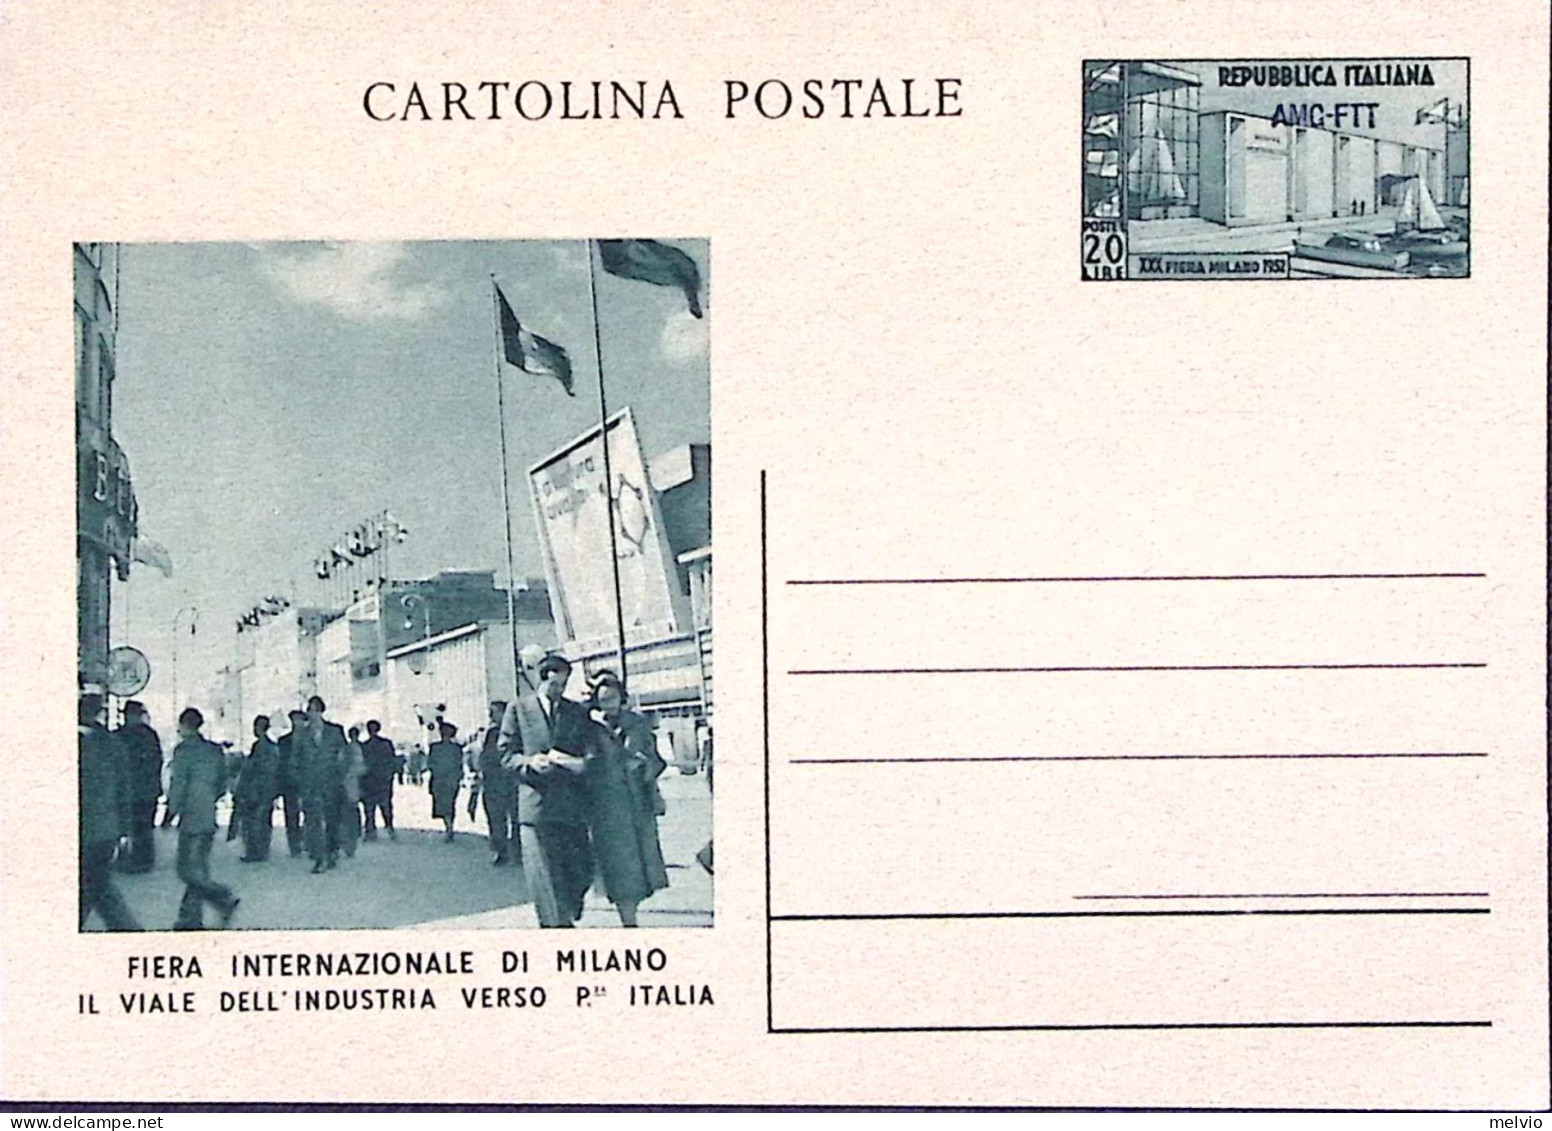 1952-AMG-FTT Cartolina Postale Fiera Milano Lire 20 Nuova - Storia Postale